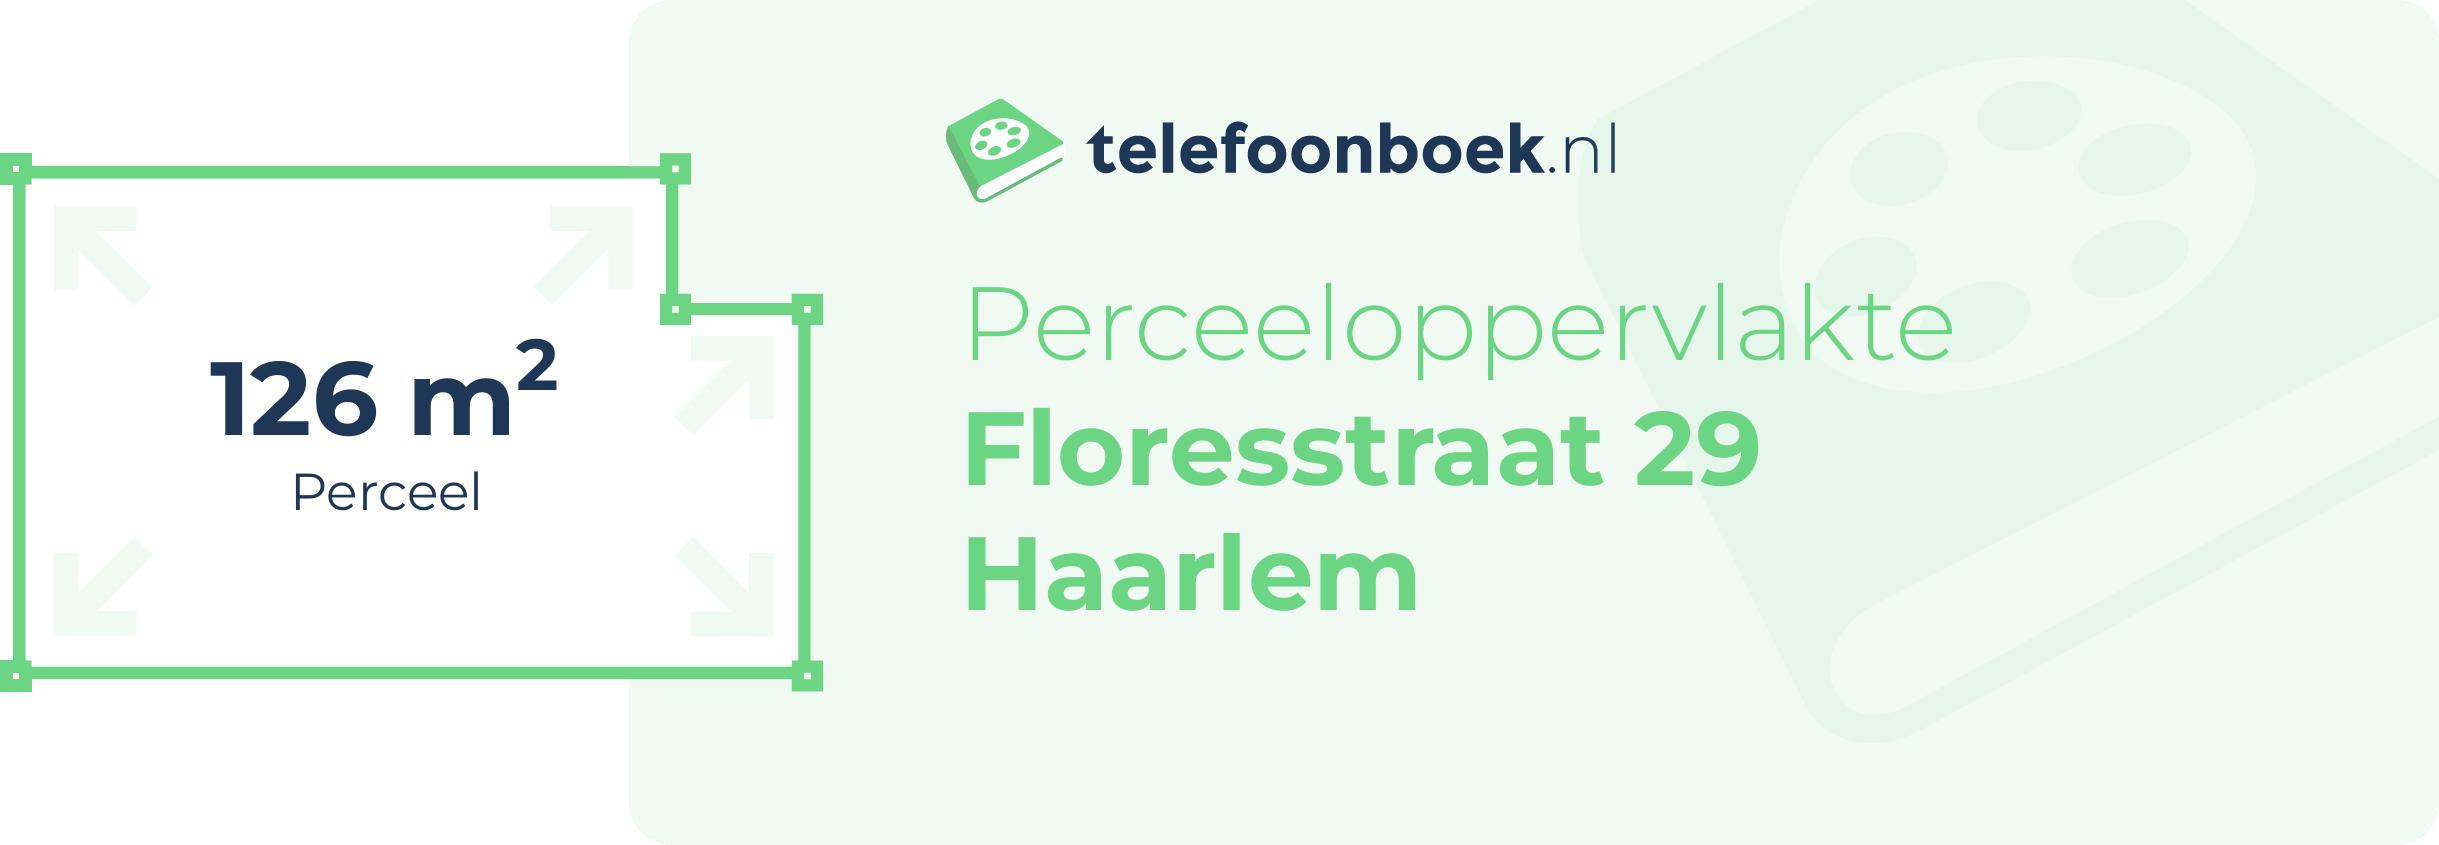 Perceeloppervlakte Floresstraat 29 Haarlem